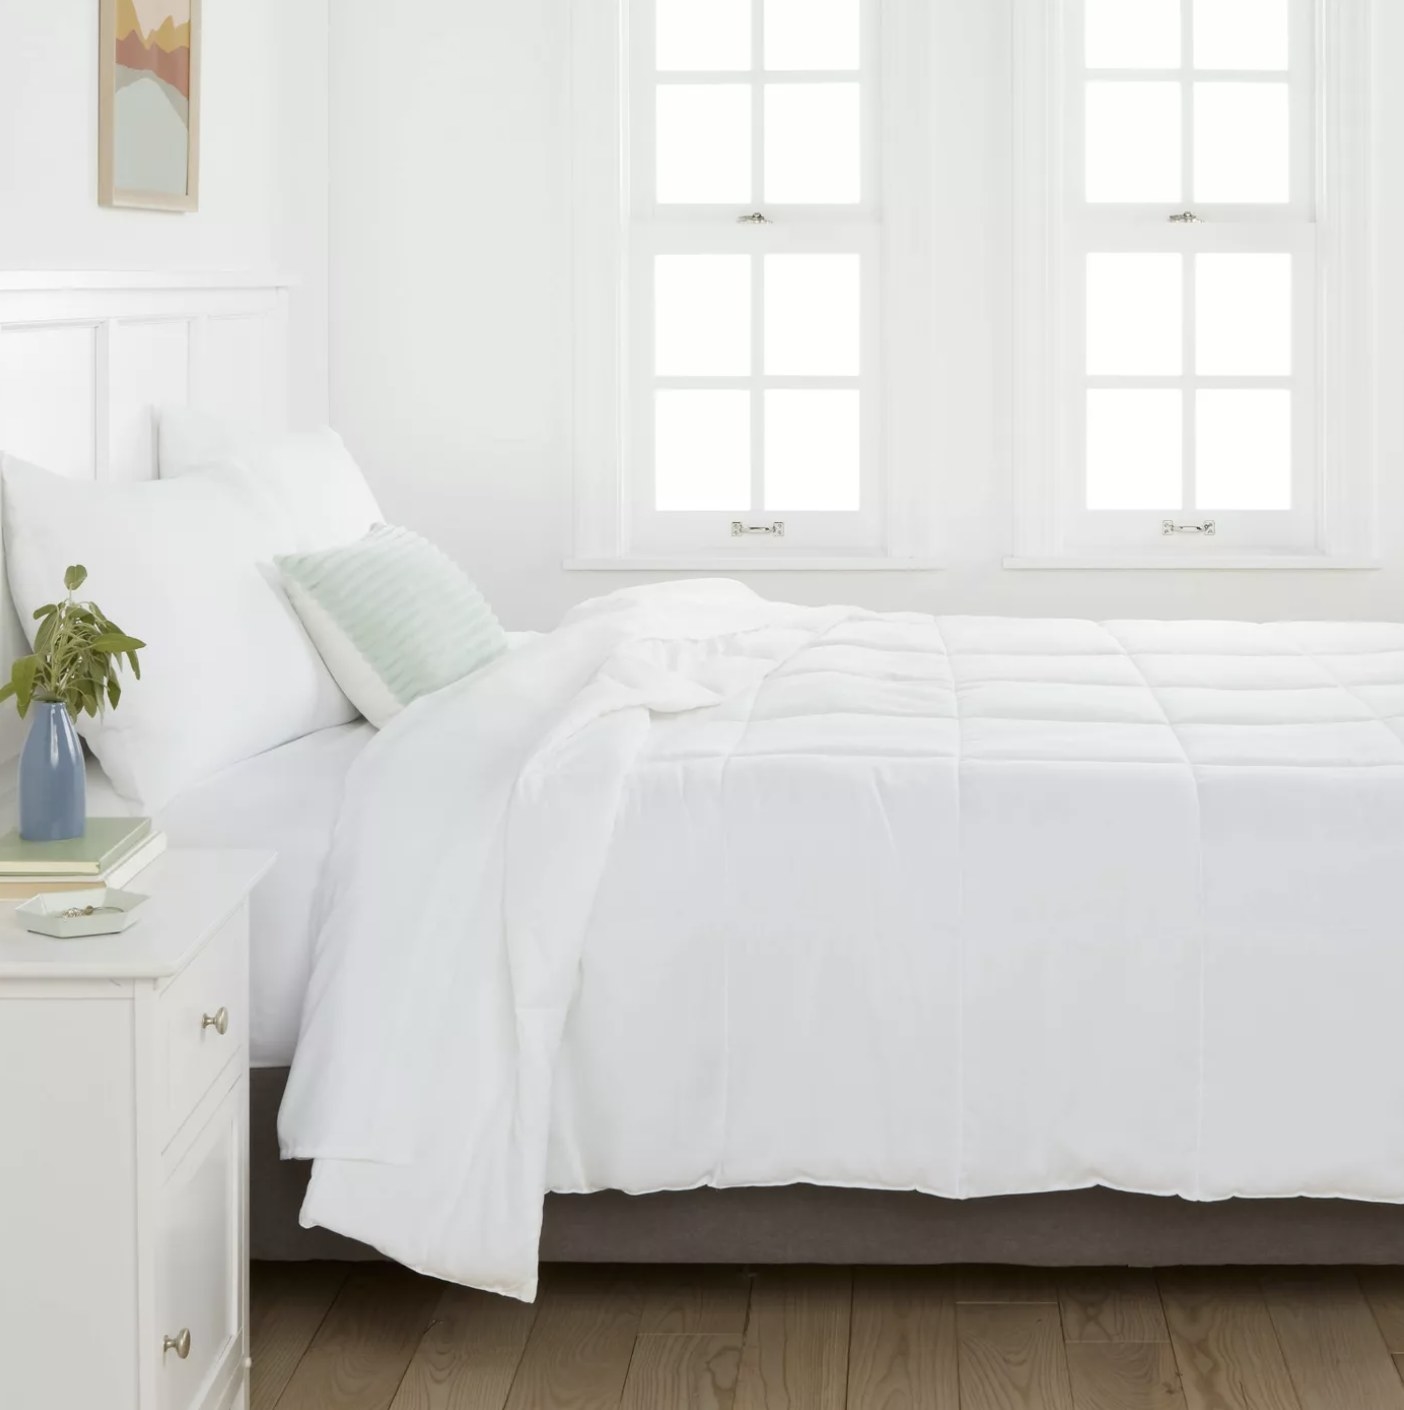 The white comforter